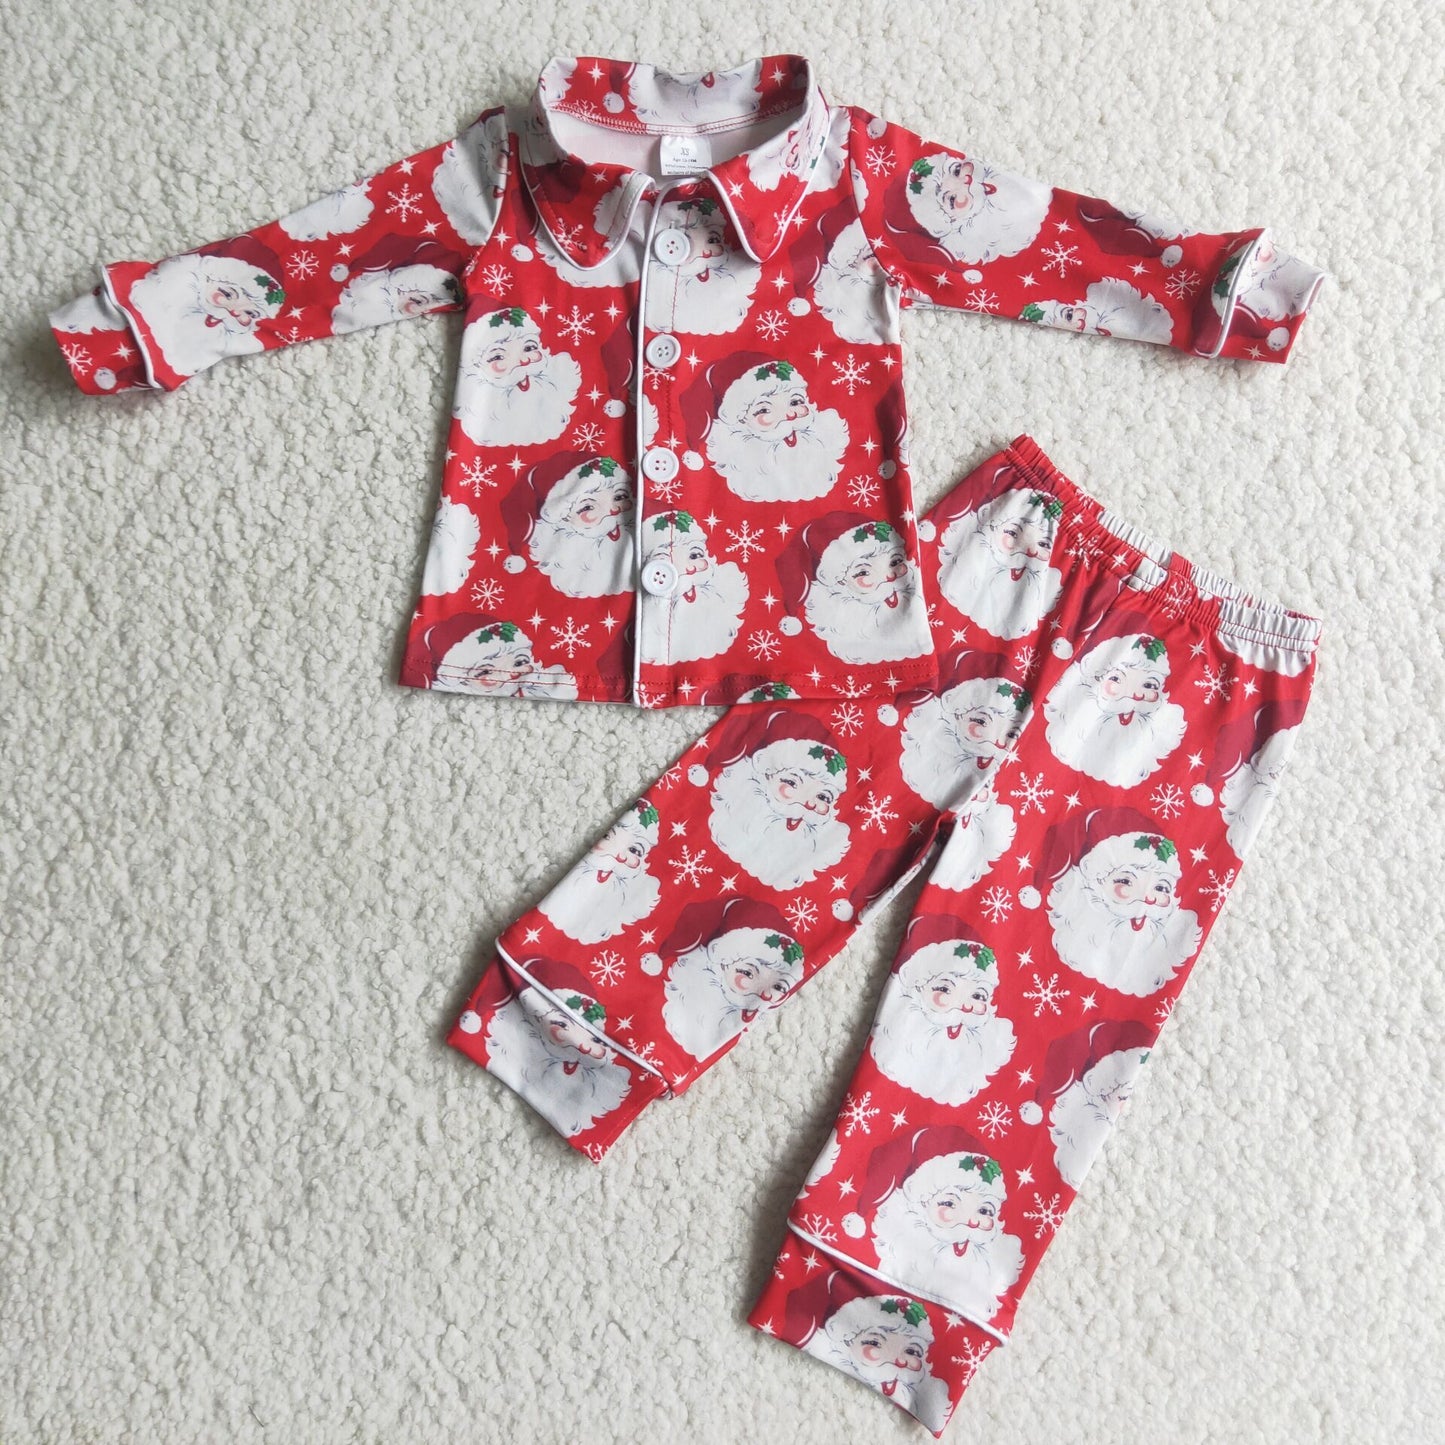 Boys long sleeve pajama set